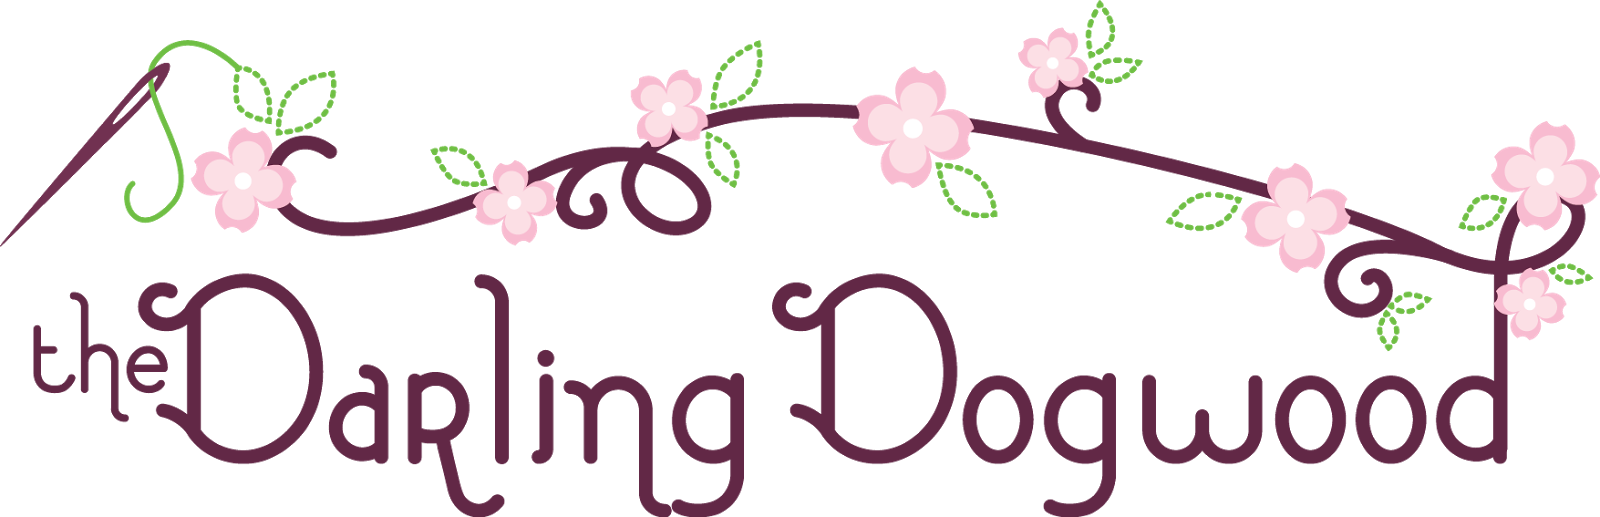 The Darling Dogwood